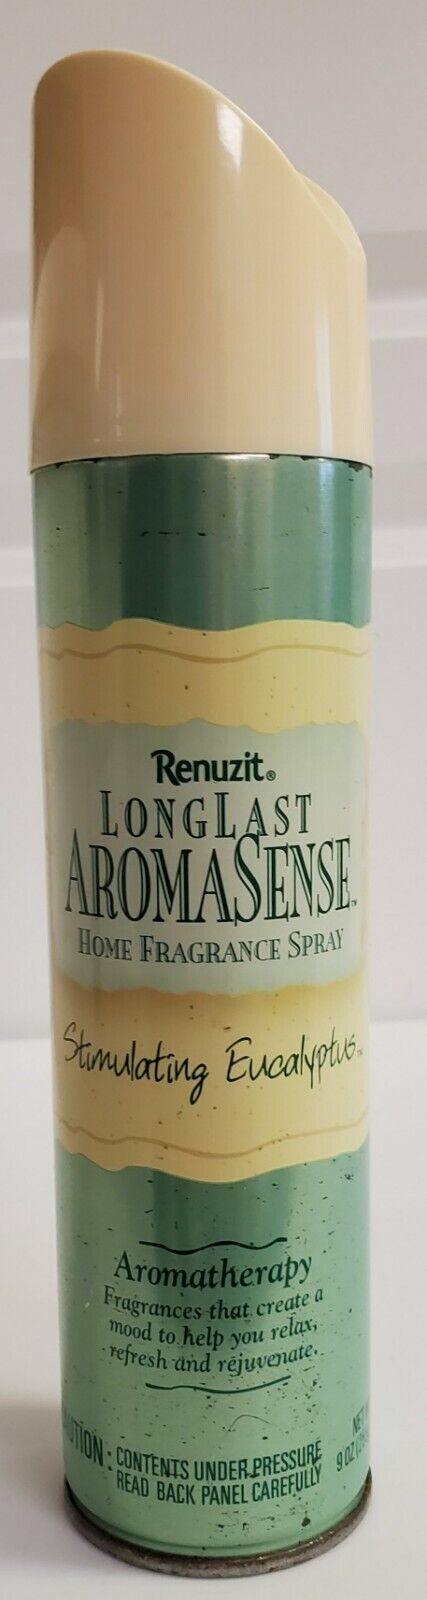 Vintage Discontinued Renuzit Longlast aromasense stimulating eucalyptus RARE